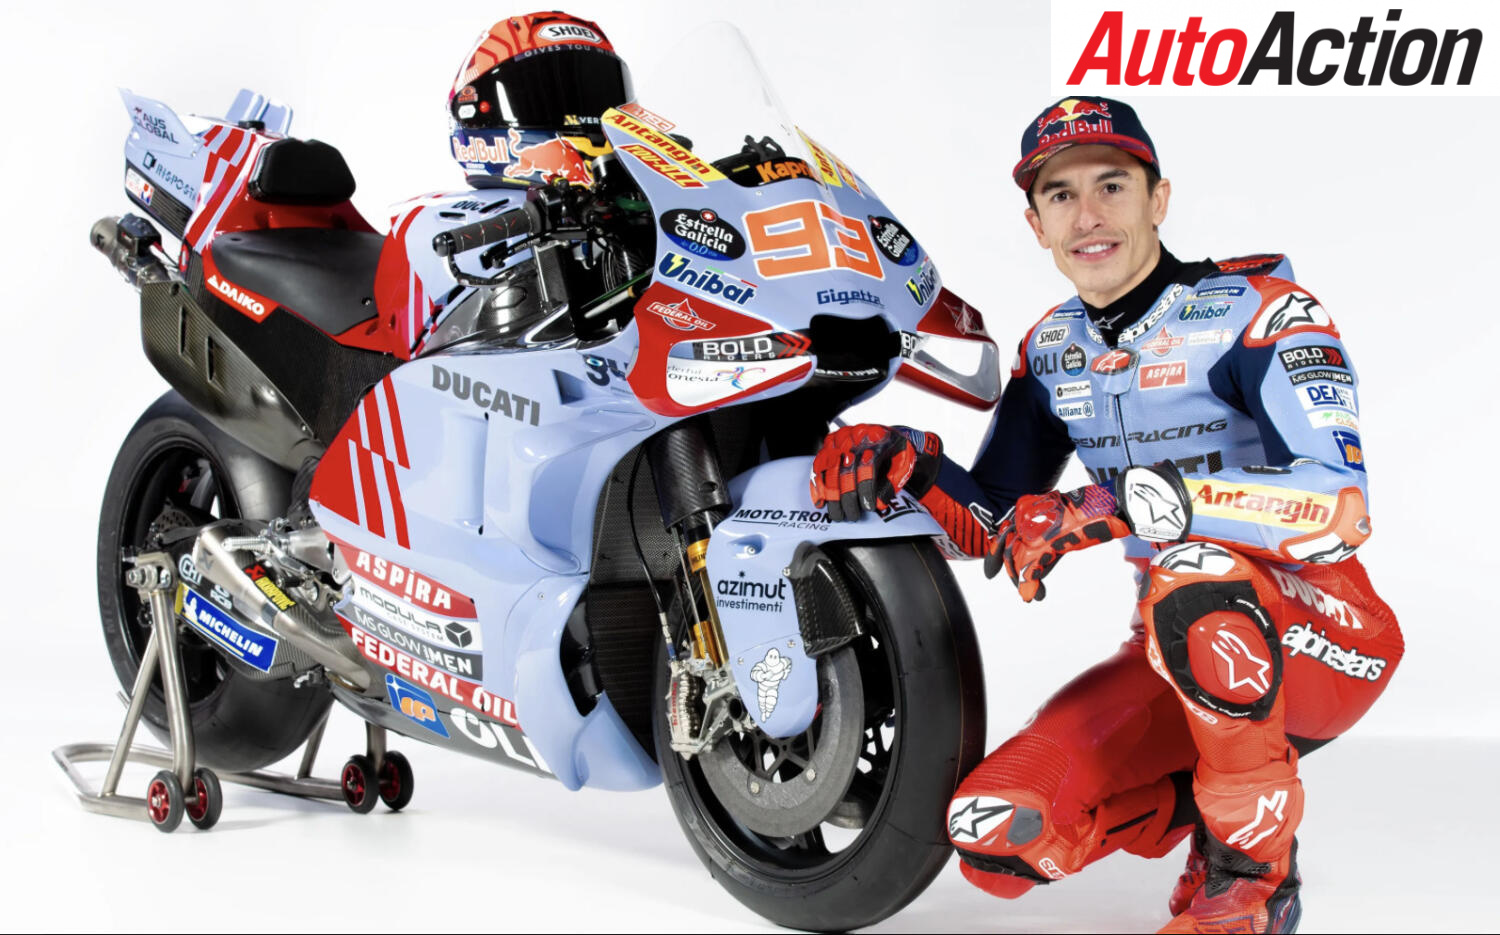 Marquez’ first Gresini Ducati revealed Auto Action